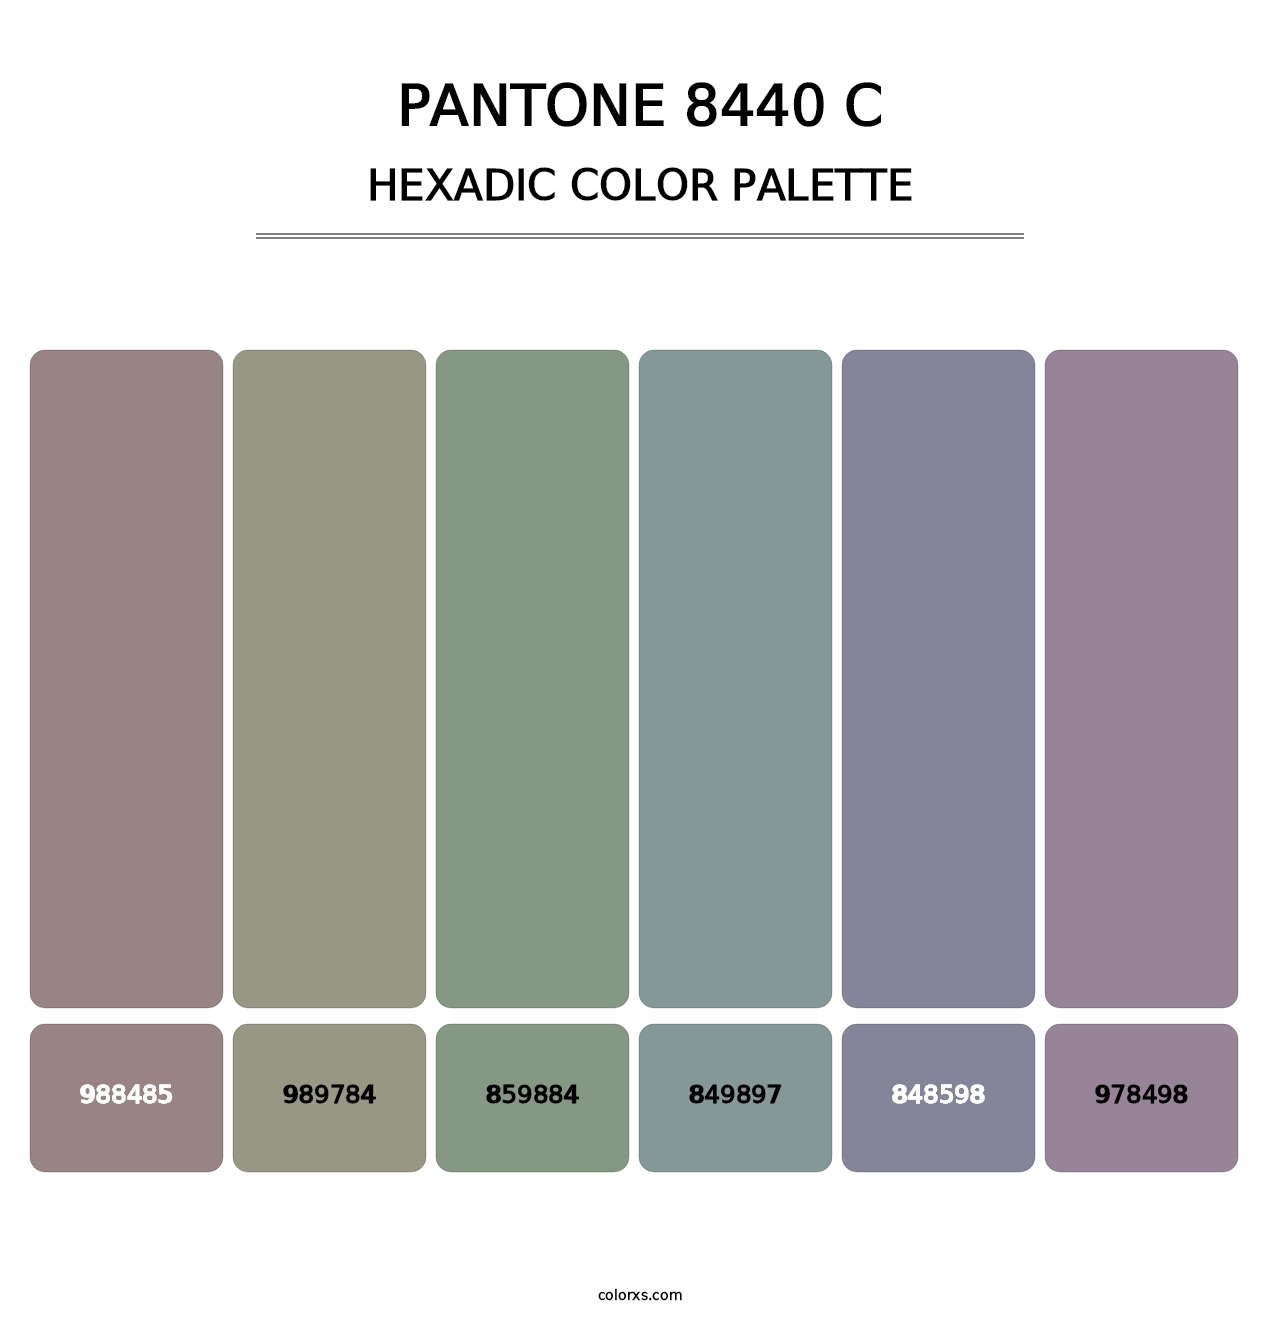 PANTONE 8440 C - Hexadic Color Palette